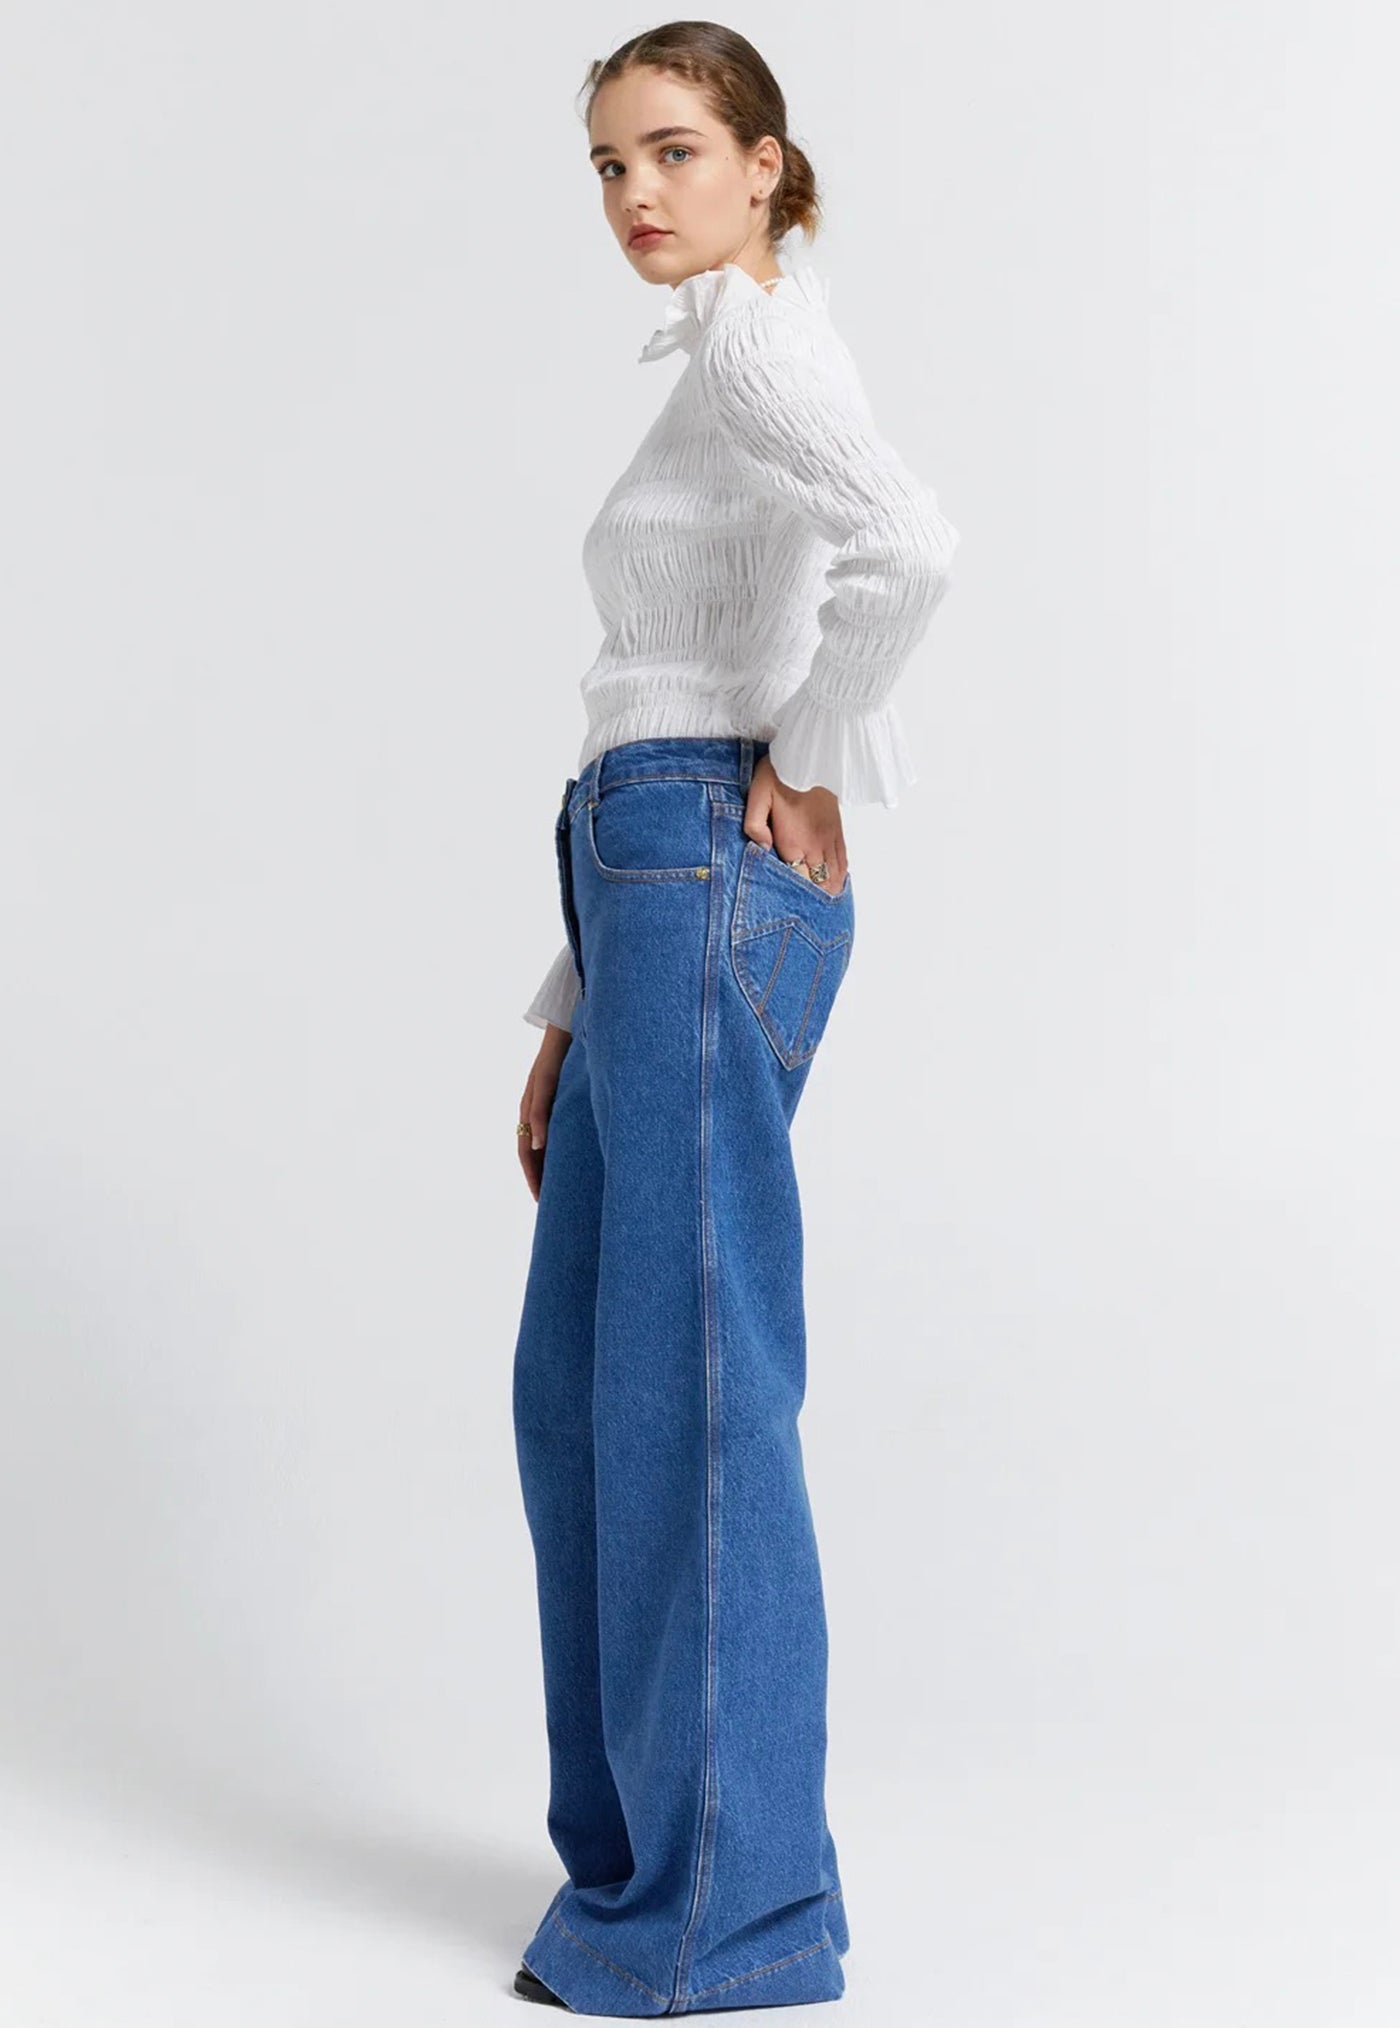 Mod Flared Jeans - Washed Denim sold by Angel Divine